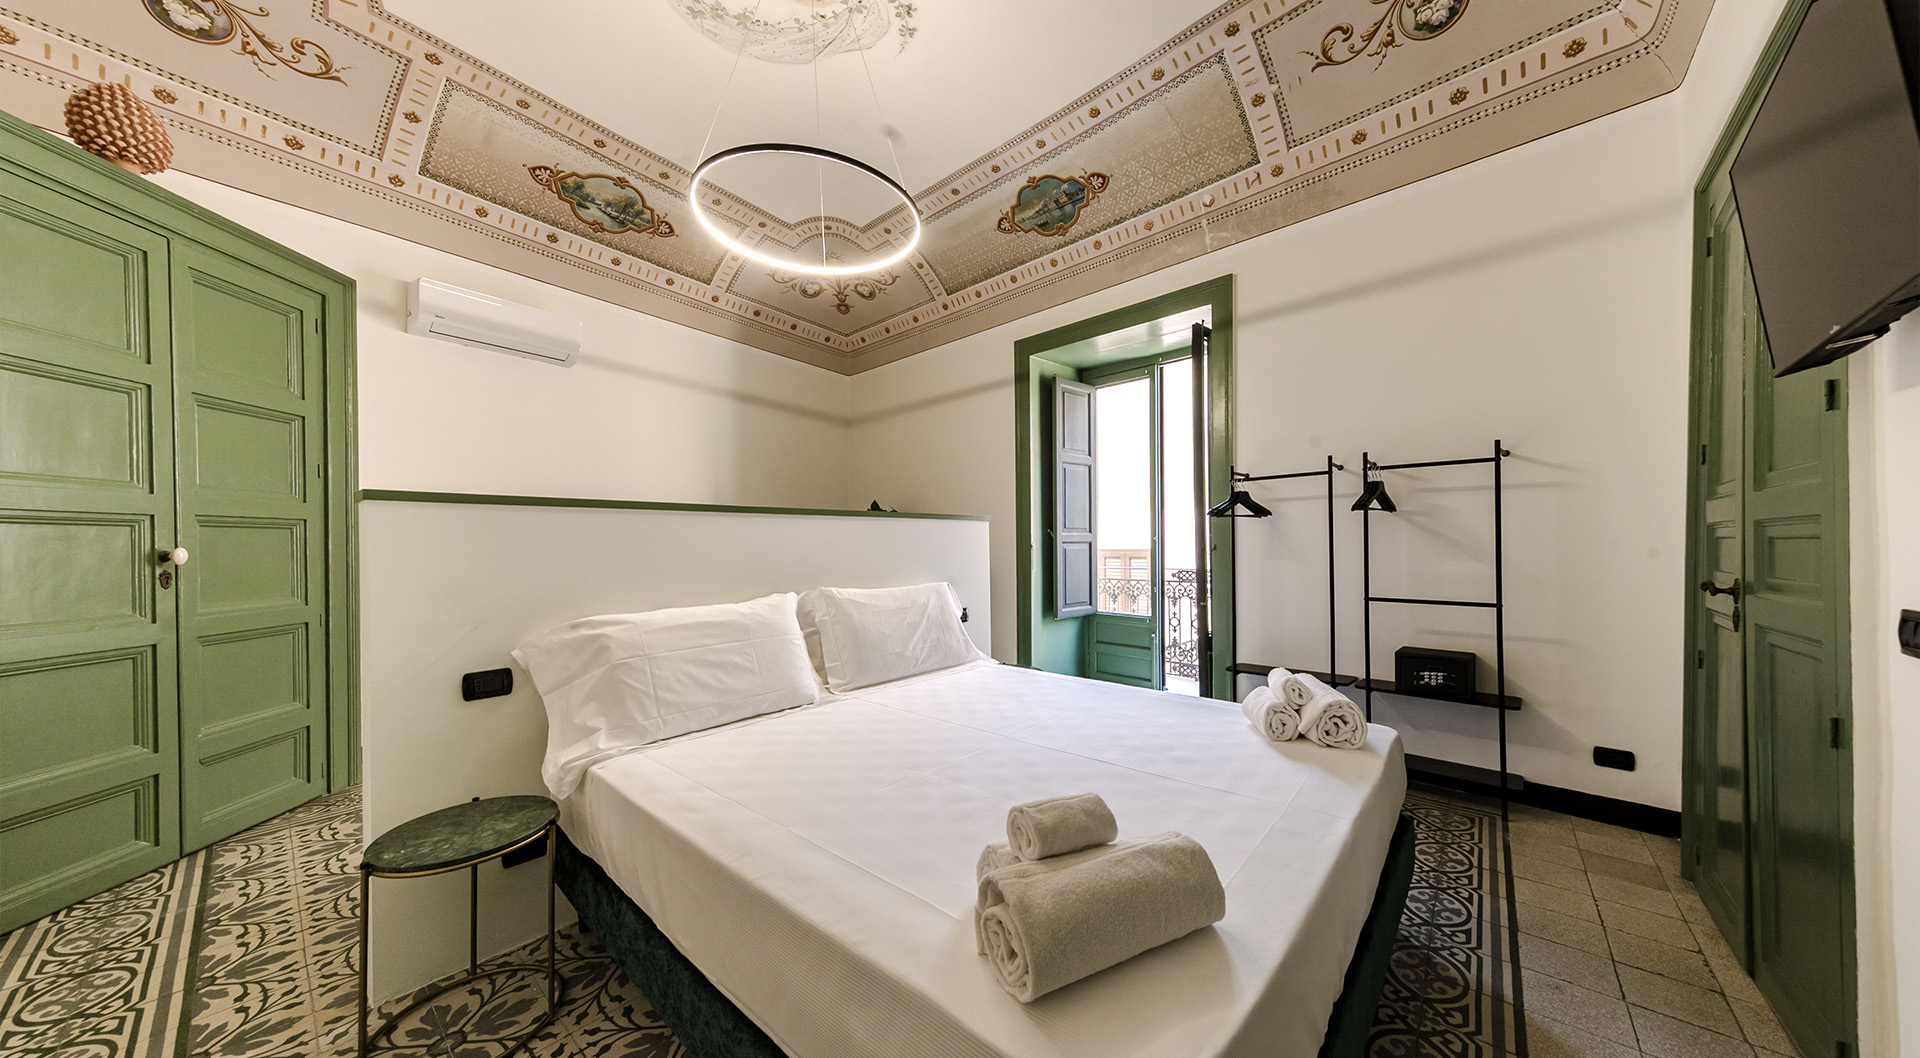 Camere - rooms - Palazzo Villelmi